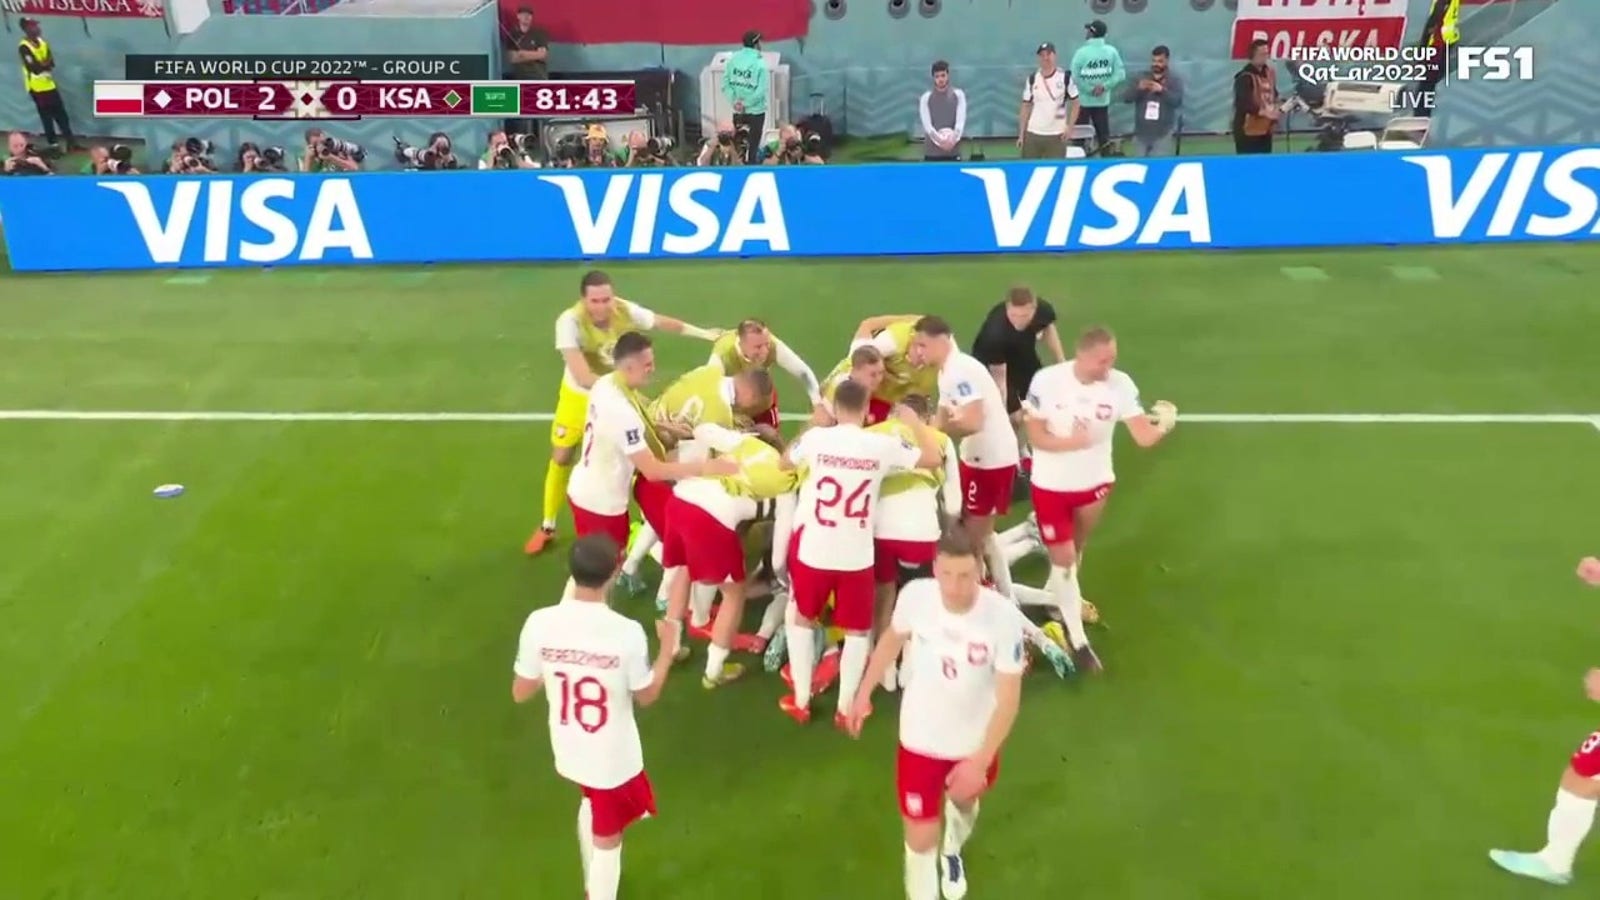 Robert Lewandowski scores his first World Cup goal for Poland against Saudi Arabia| 2022 FIFA World Cup